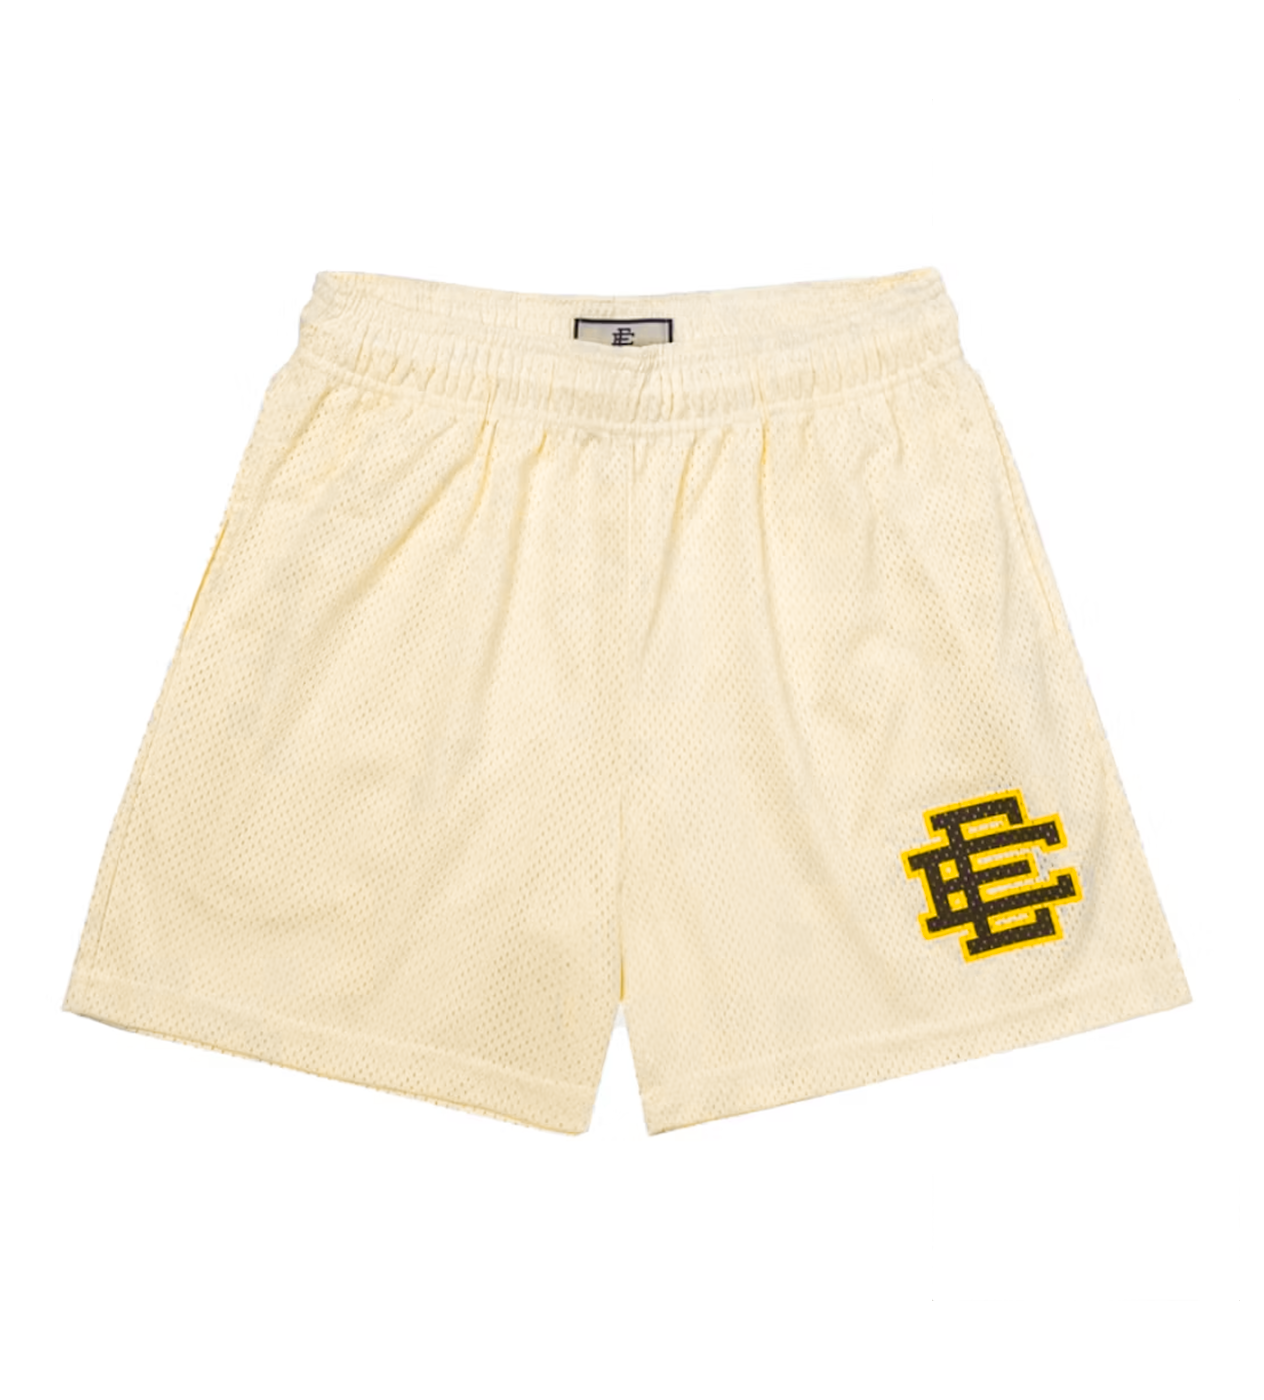 Eric Emanuel Yellow/Black Logo Shorts Cream – Restock AR